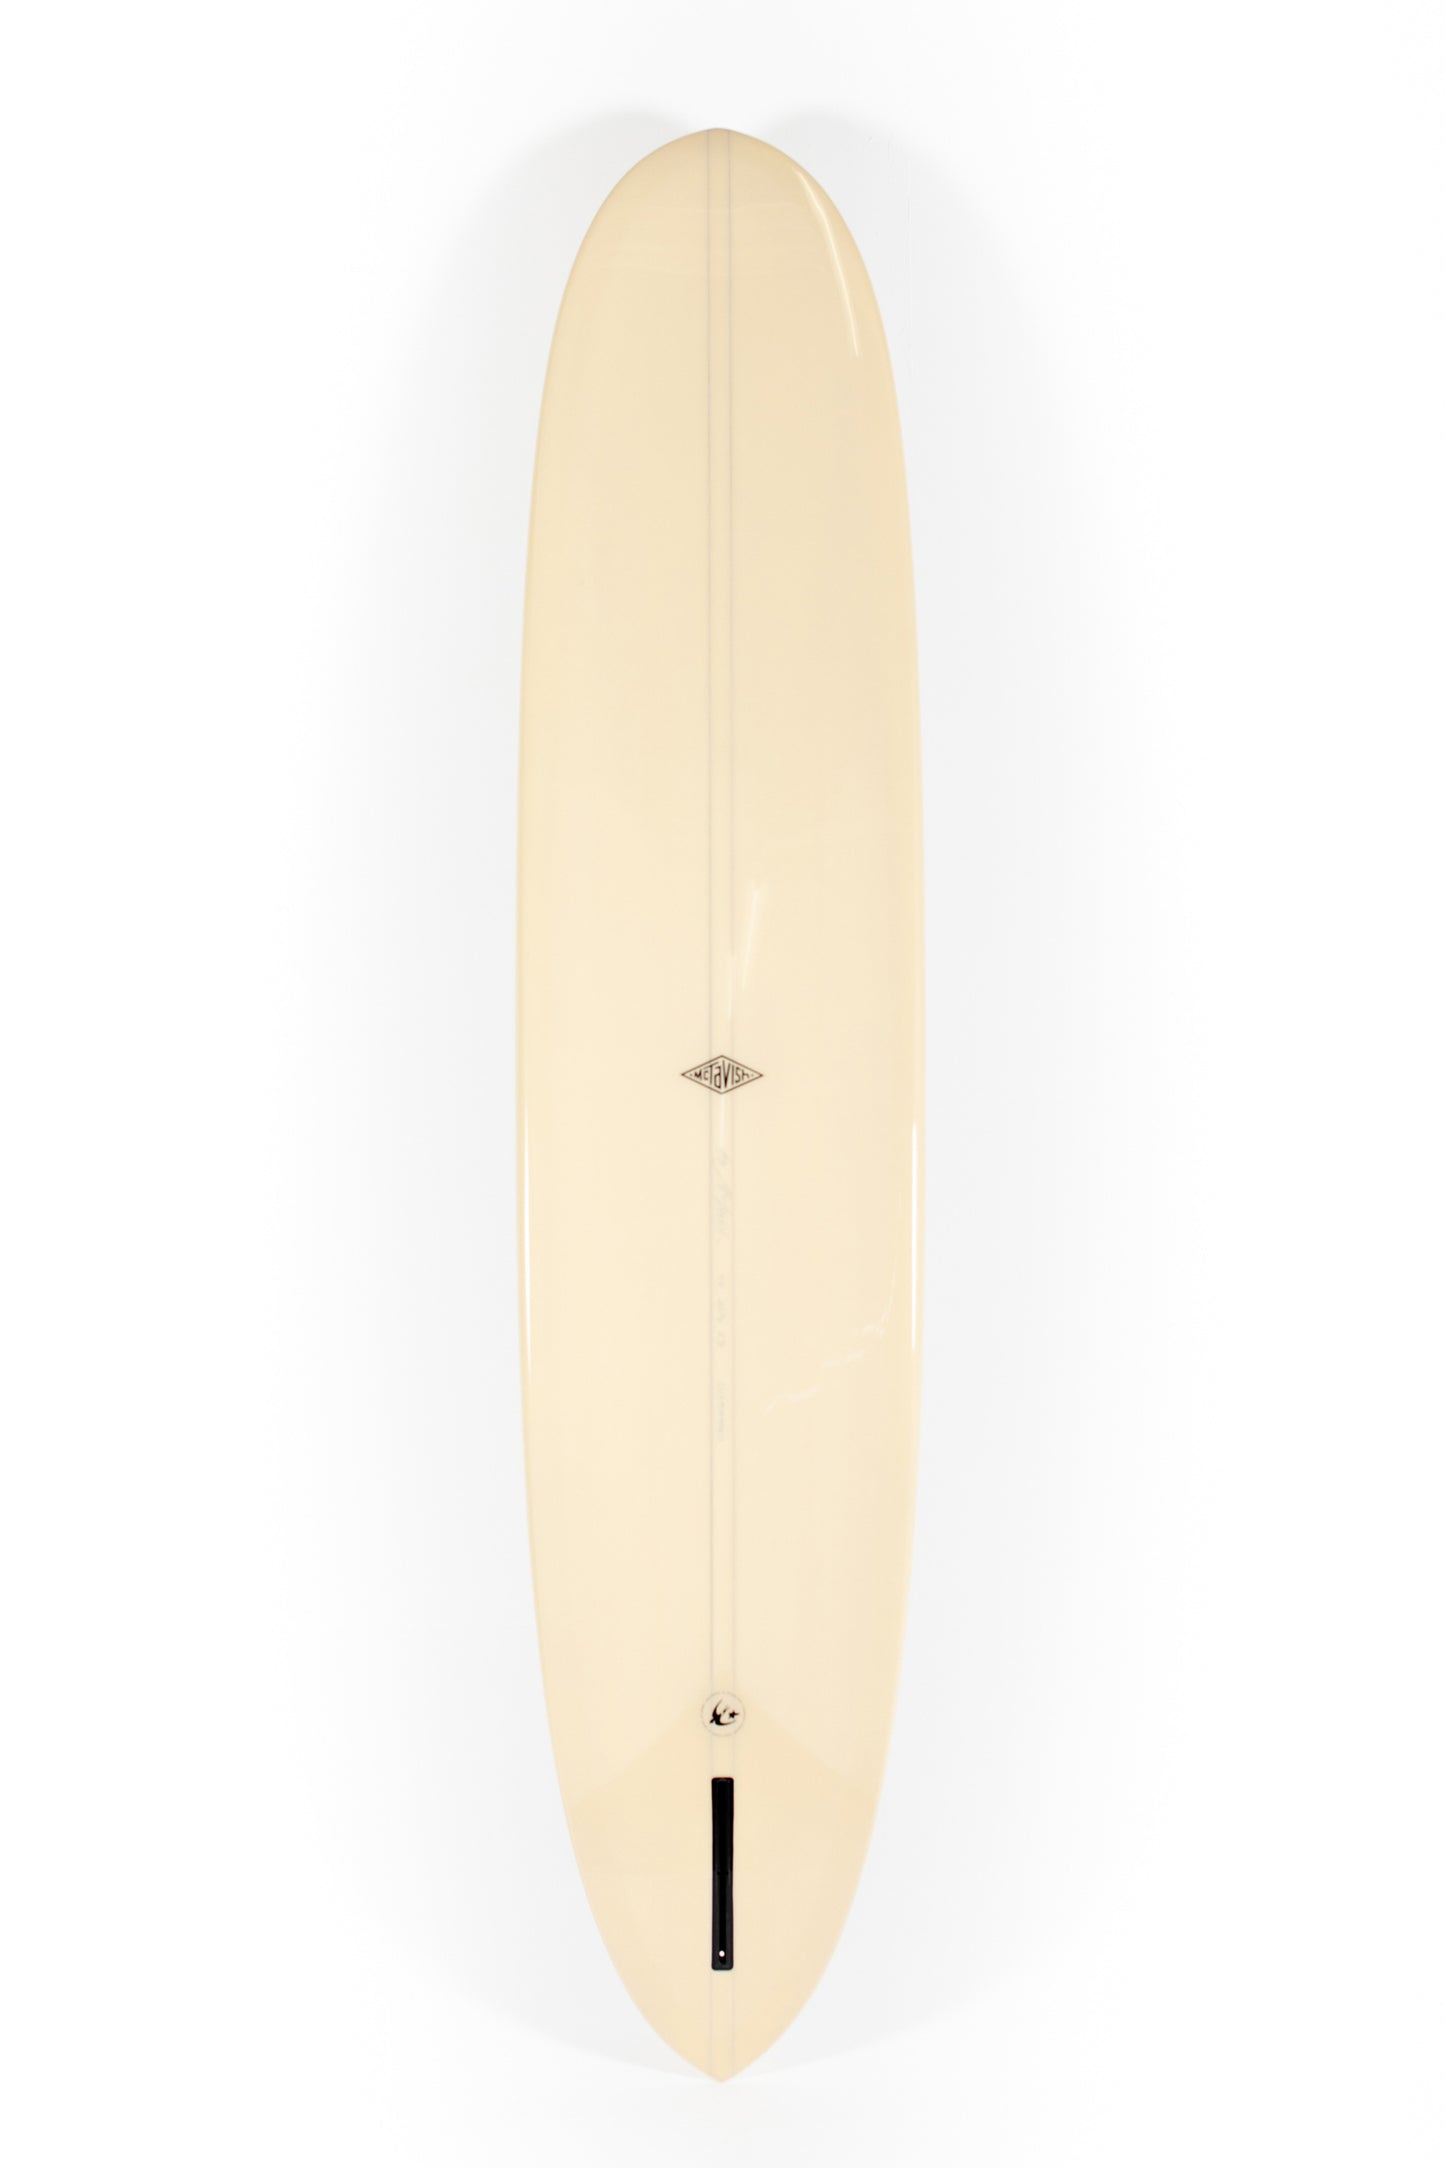 Pukas Surf Shop McTavish Surfboards Pinnacle